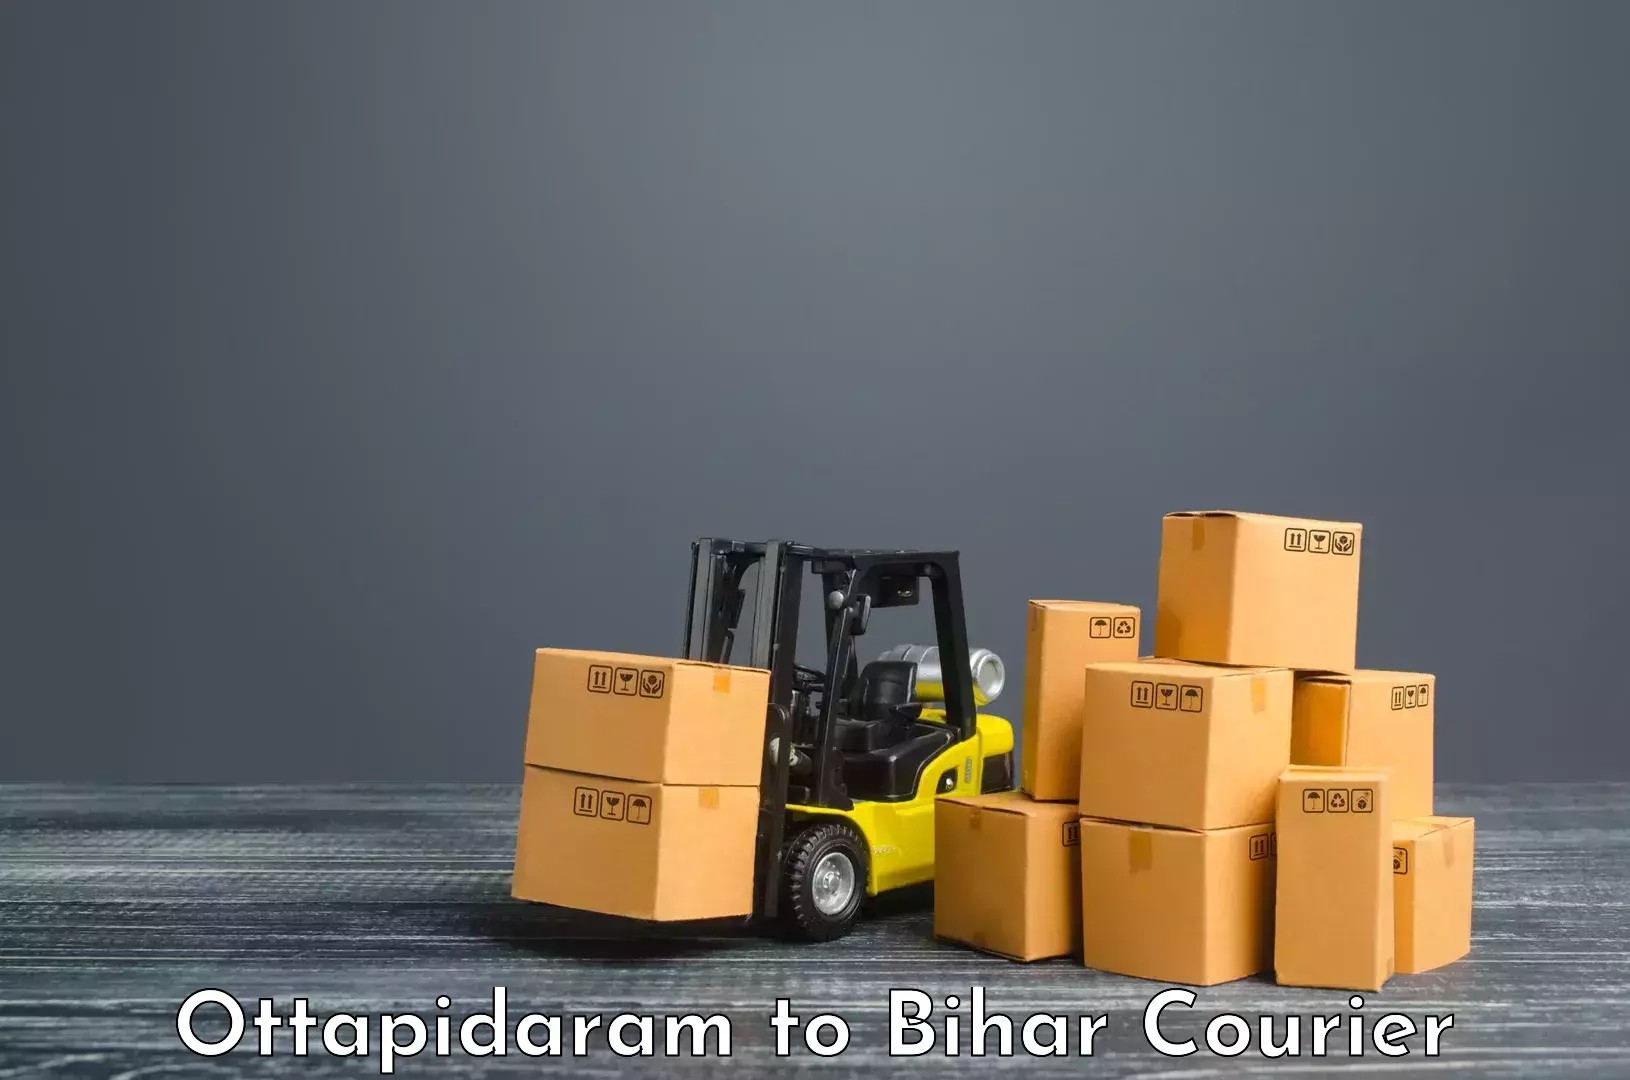 Package tracking Ottapidaram to Dhaka